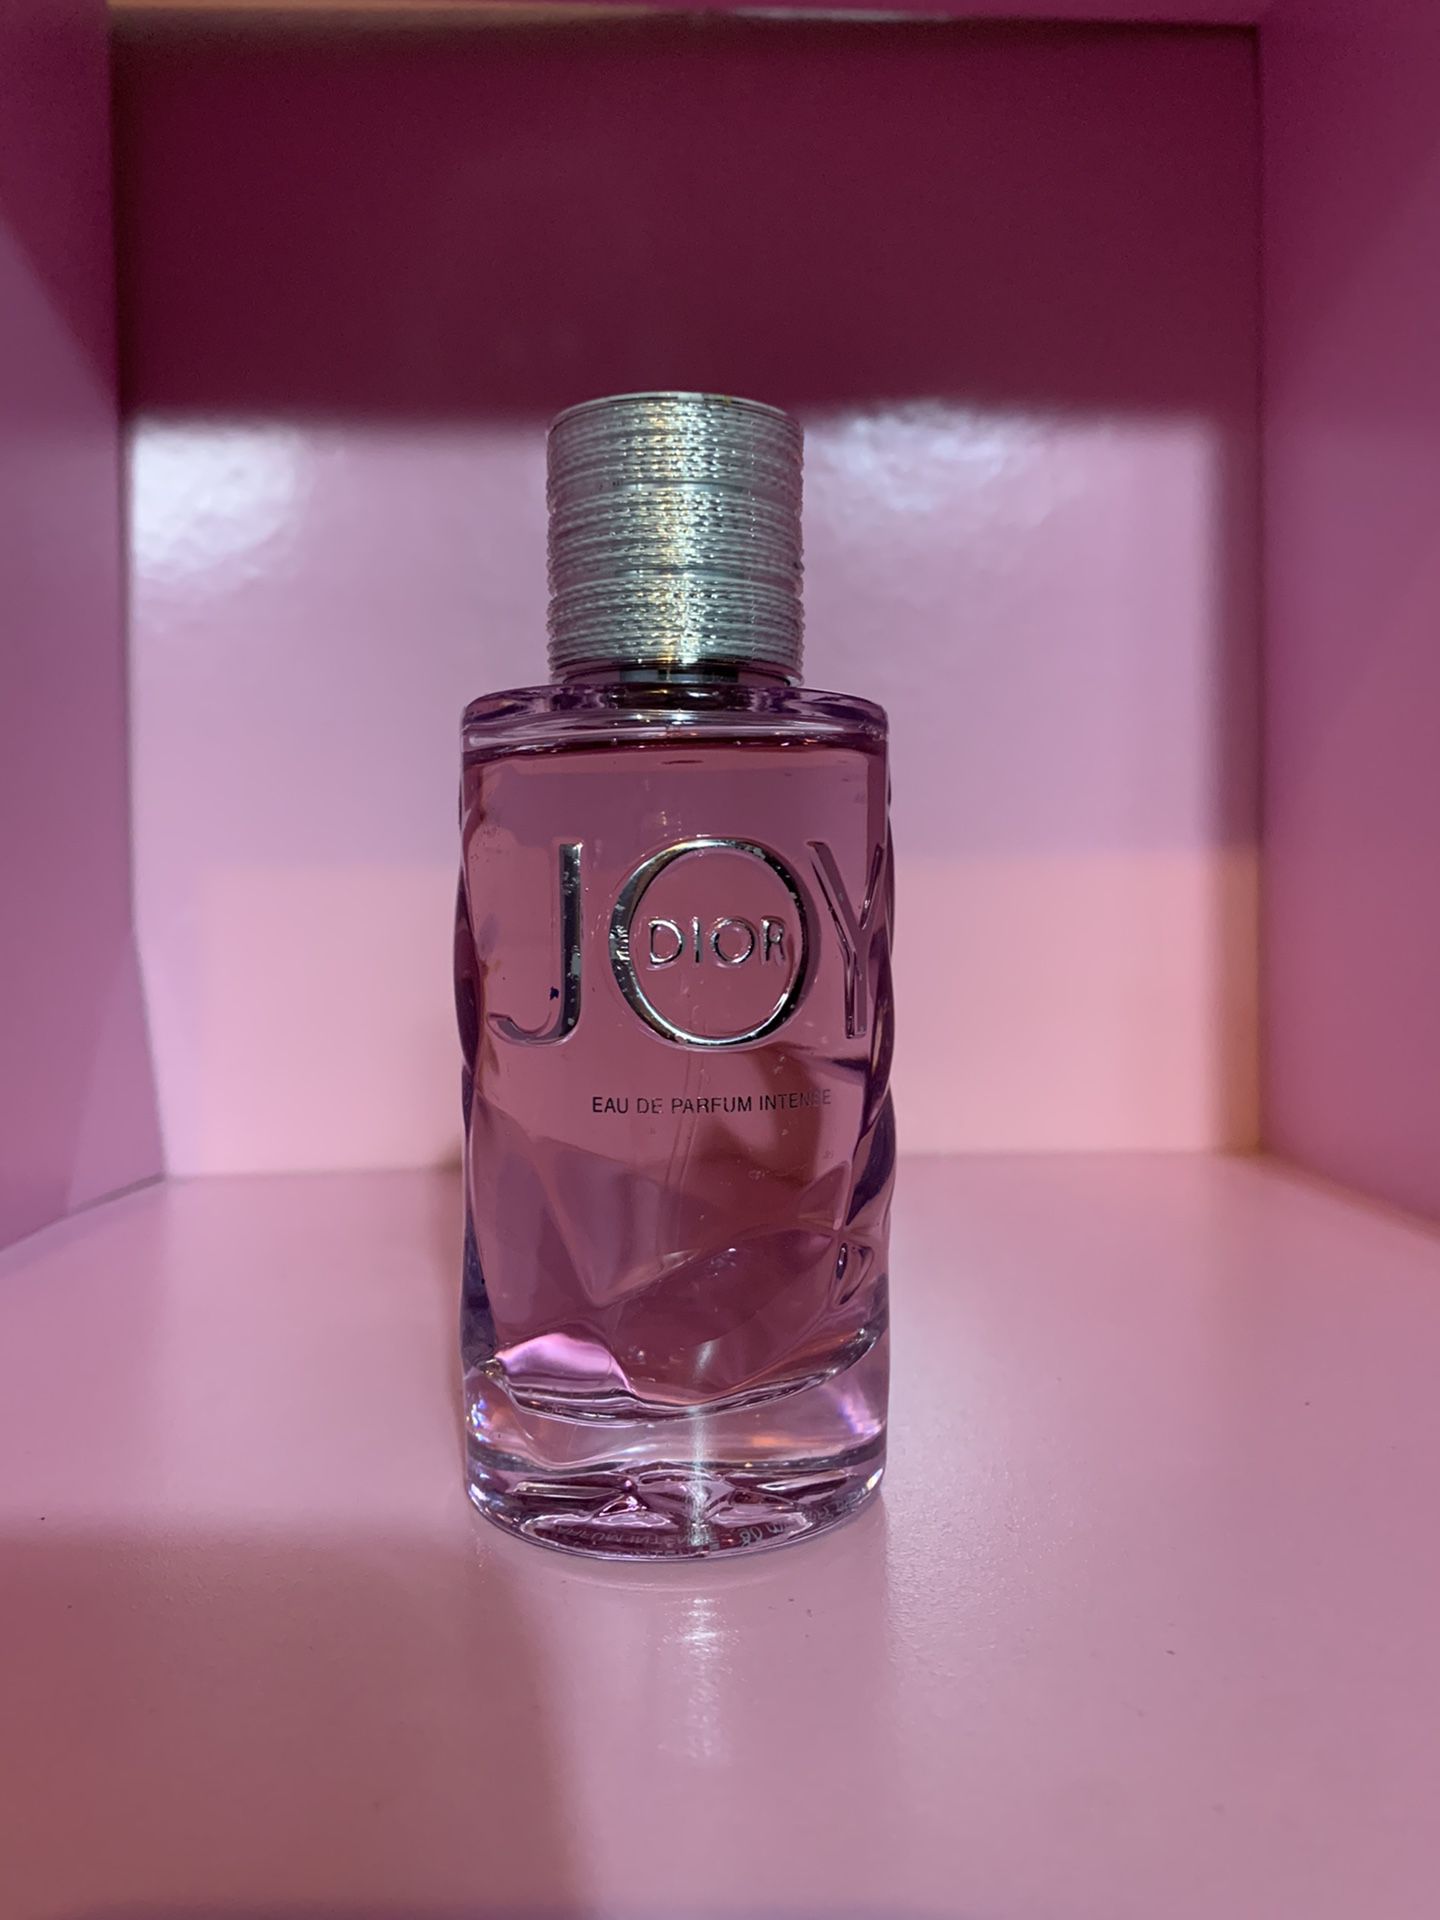 Joy dior perfume